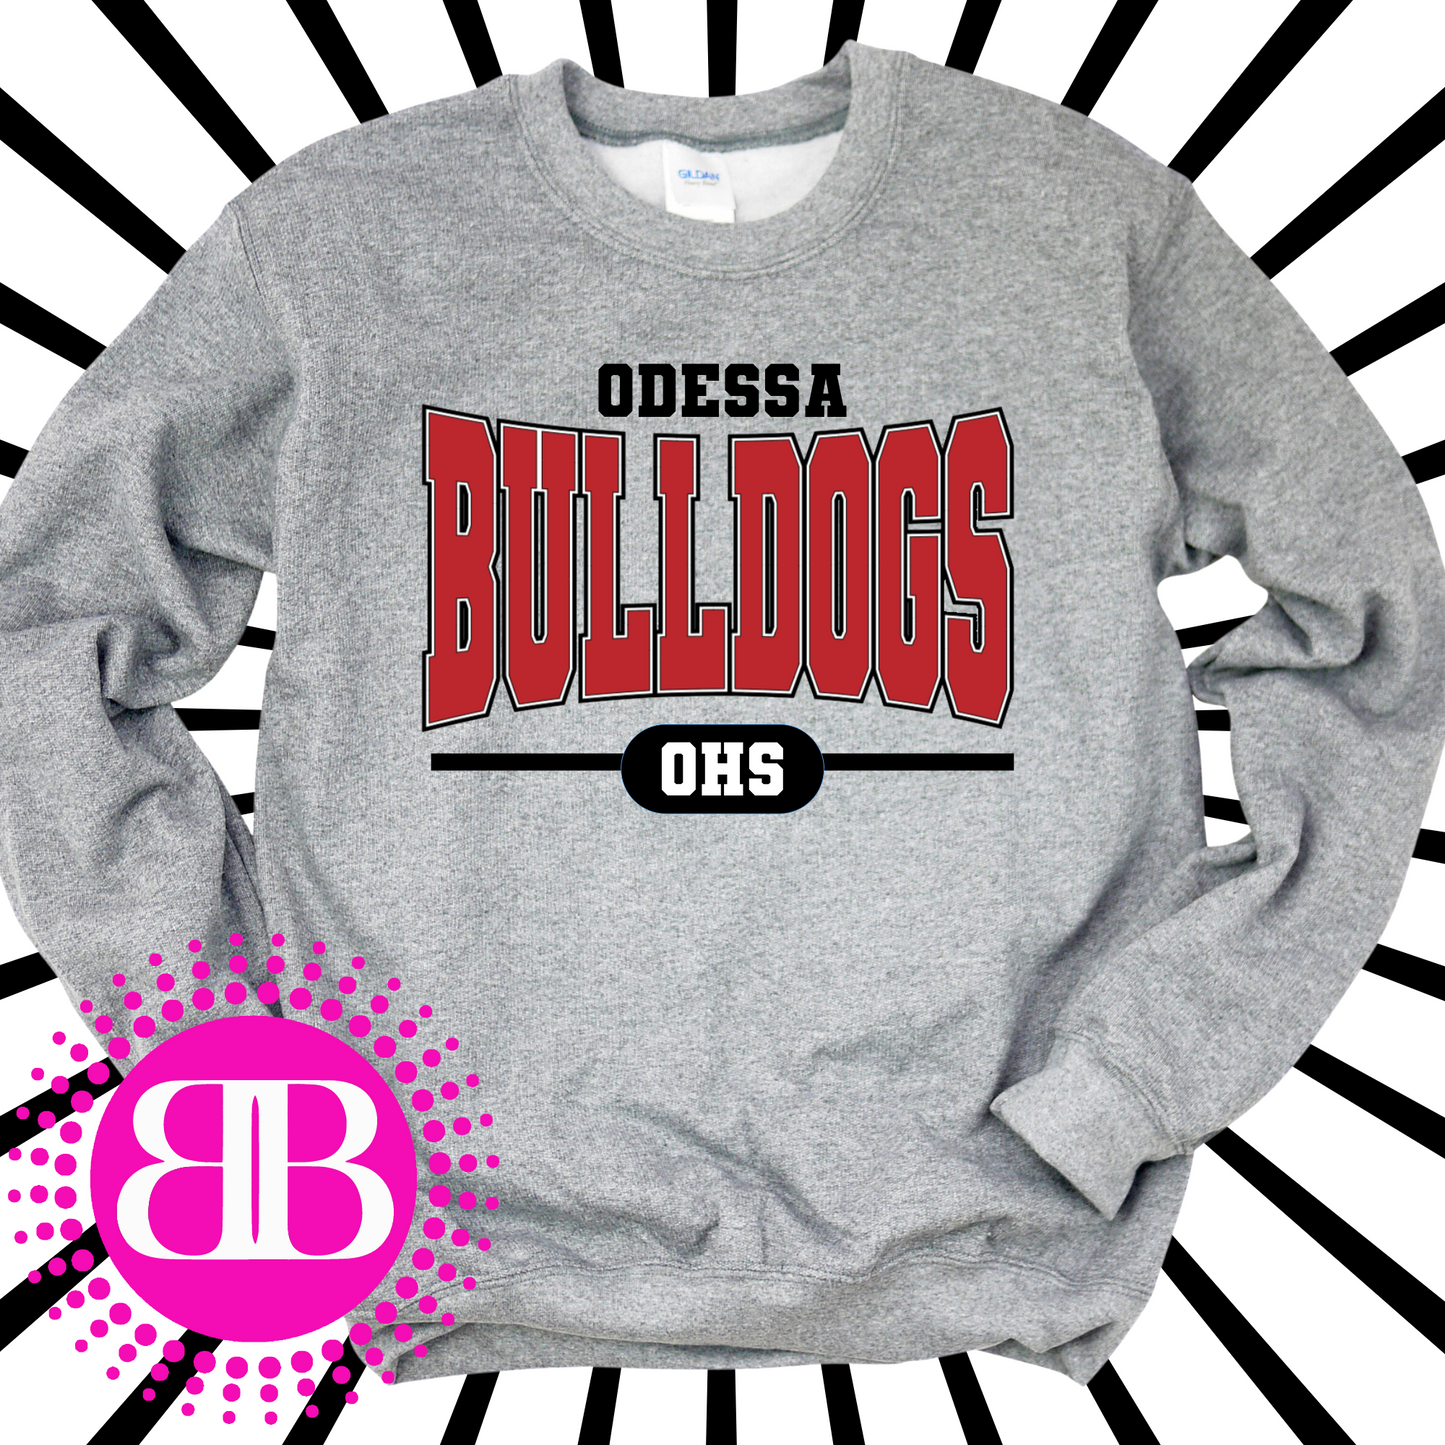 Odessa Bulldogs- OHS